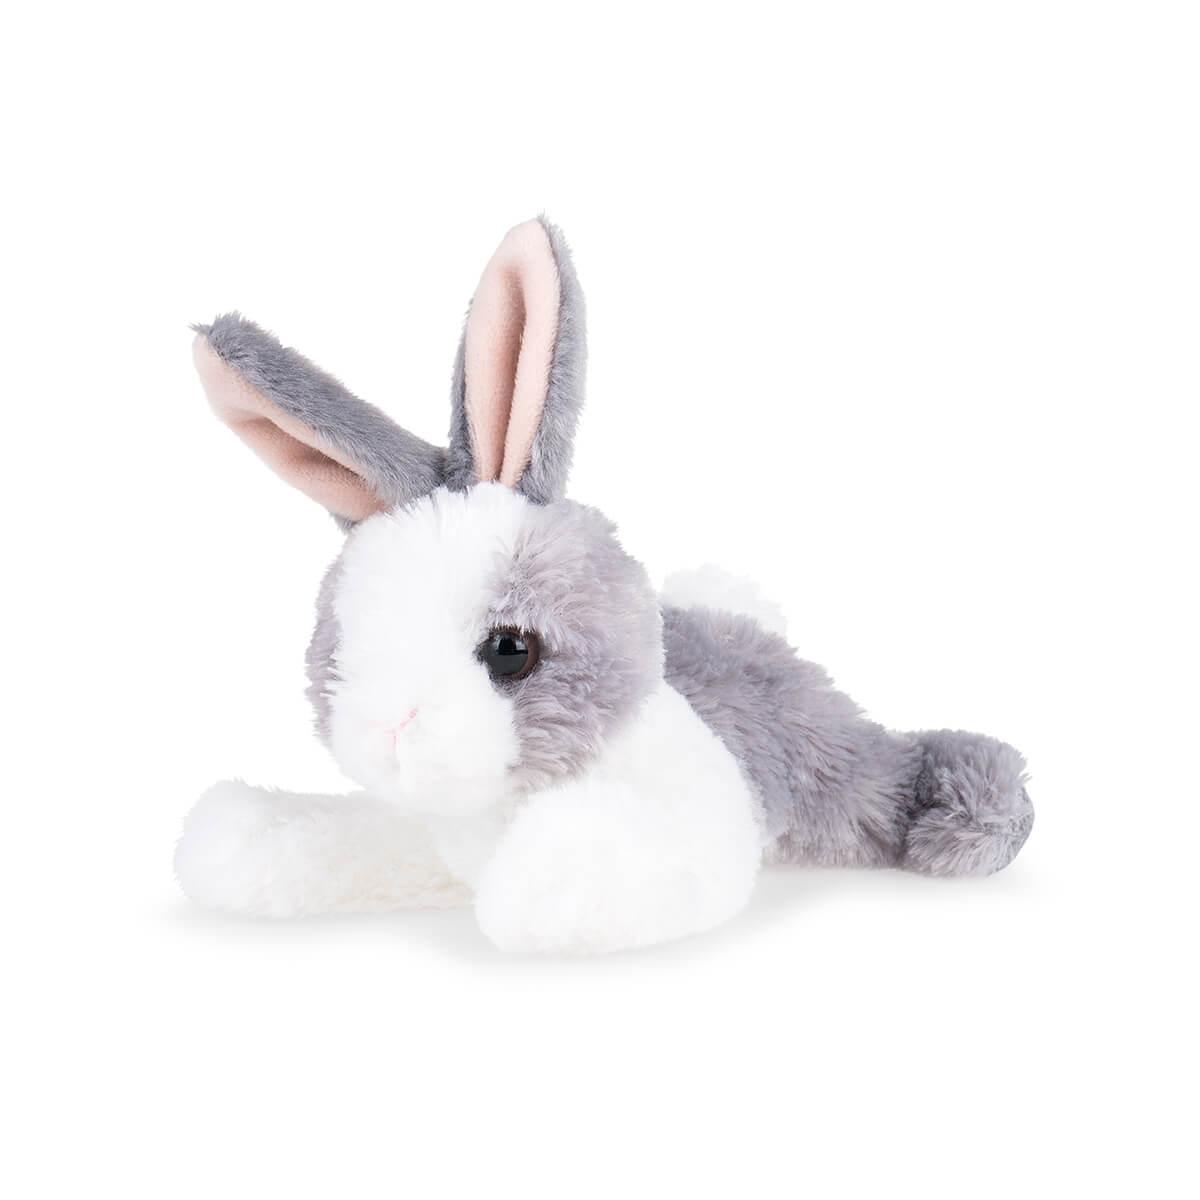  Baby Bunny Plush Toy